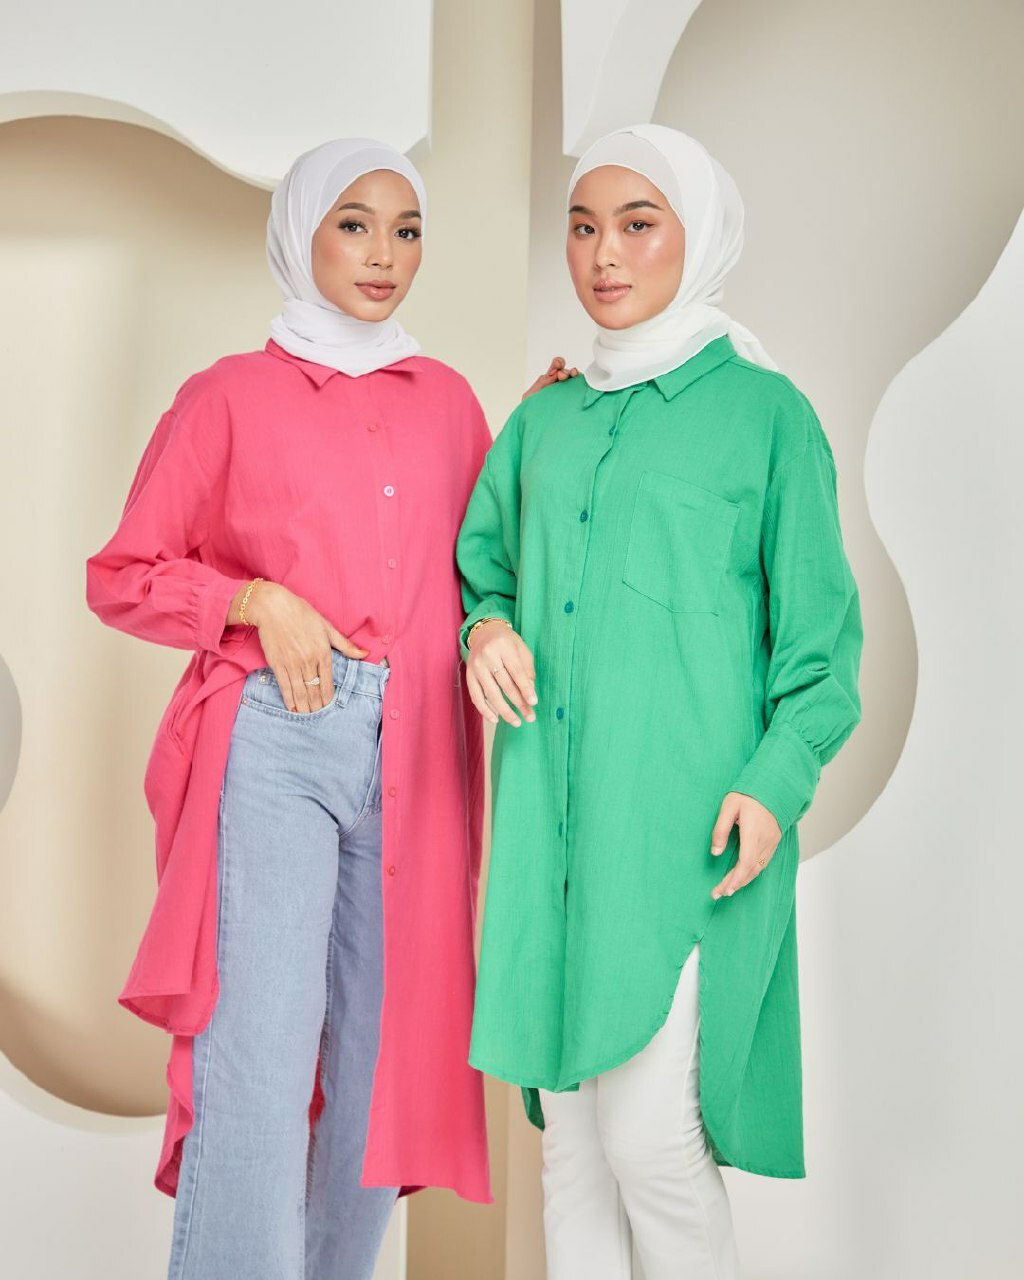 haura-wear-dayana-tunic-kaftan-midi-dress-blouse-shirt-long-sleeve-baju-muslimah-baju-perempuan-shirt-blouse-baju (3)